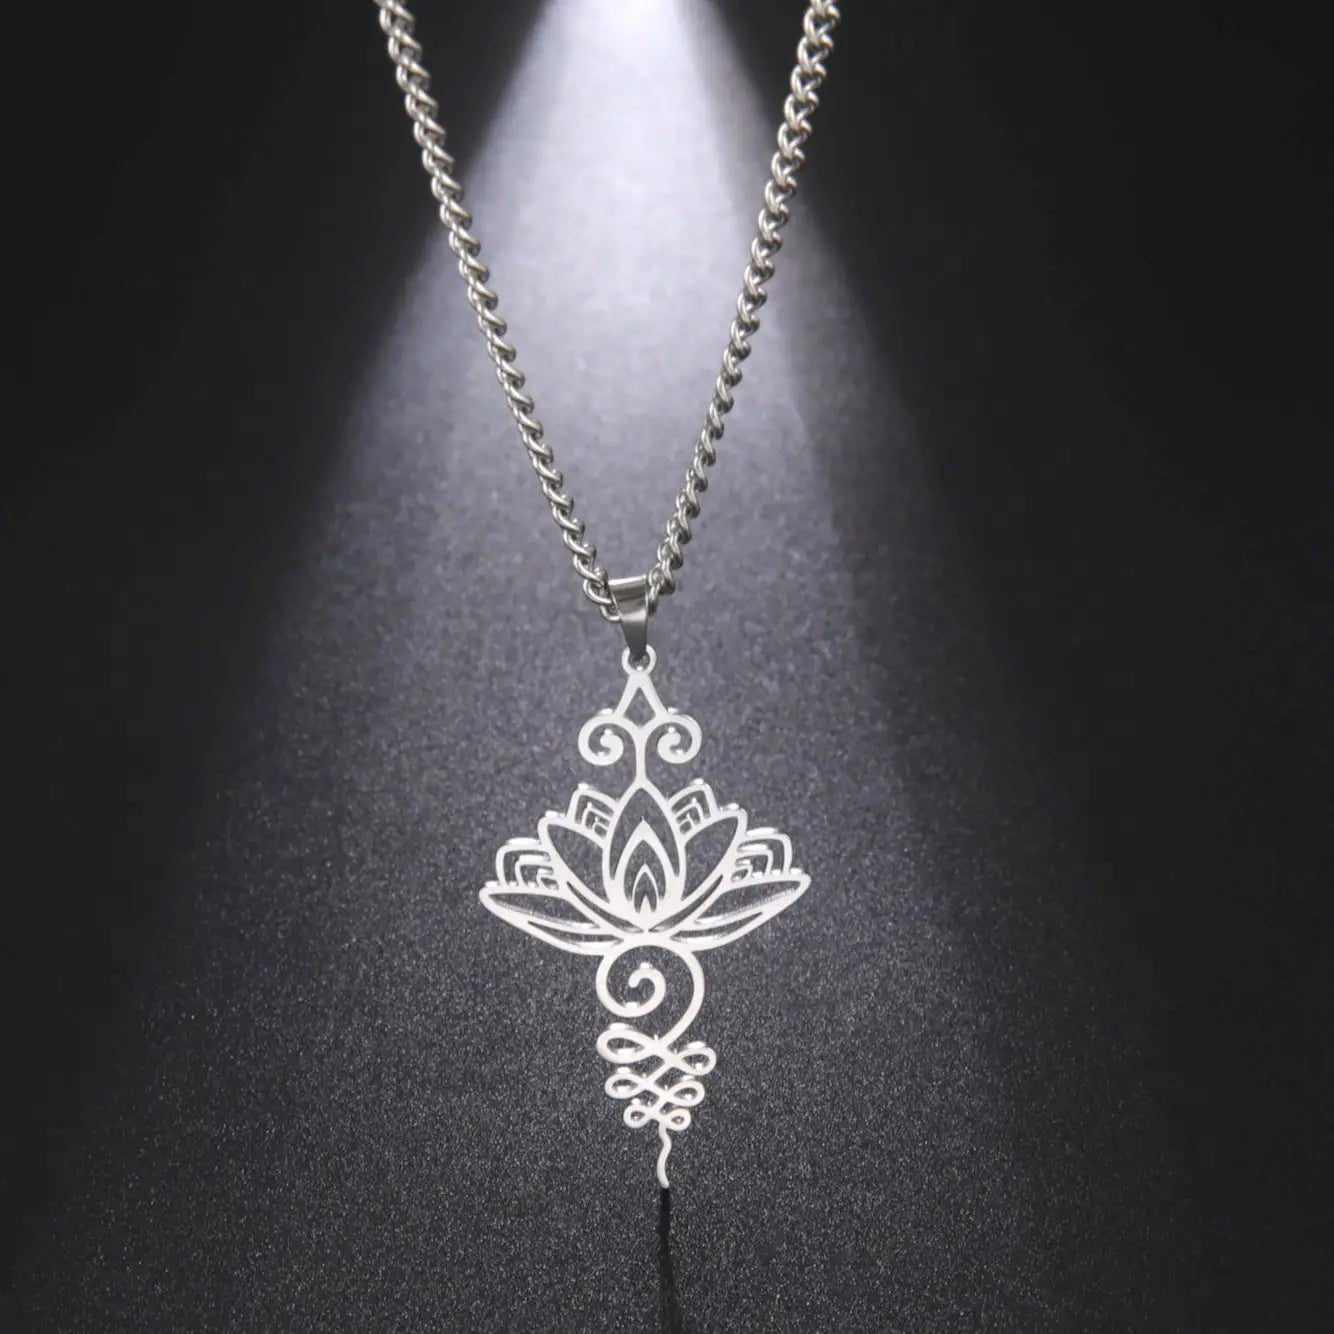 Unalome Lotus Flower Symbol Pendant Necklace - Mystical Rose Gems